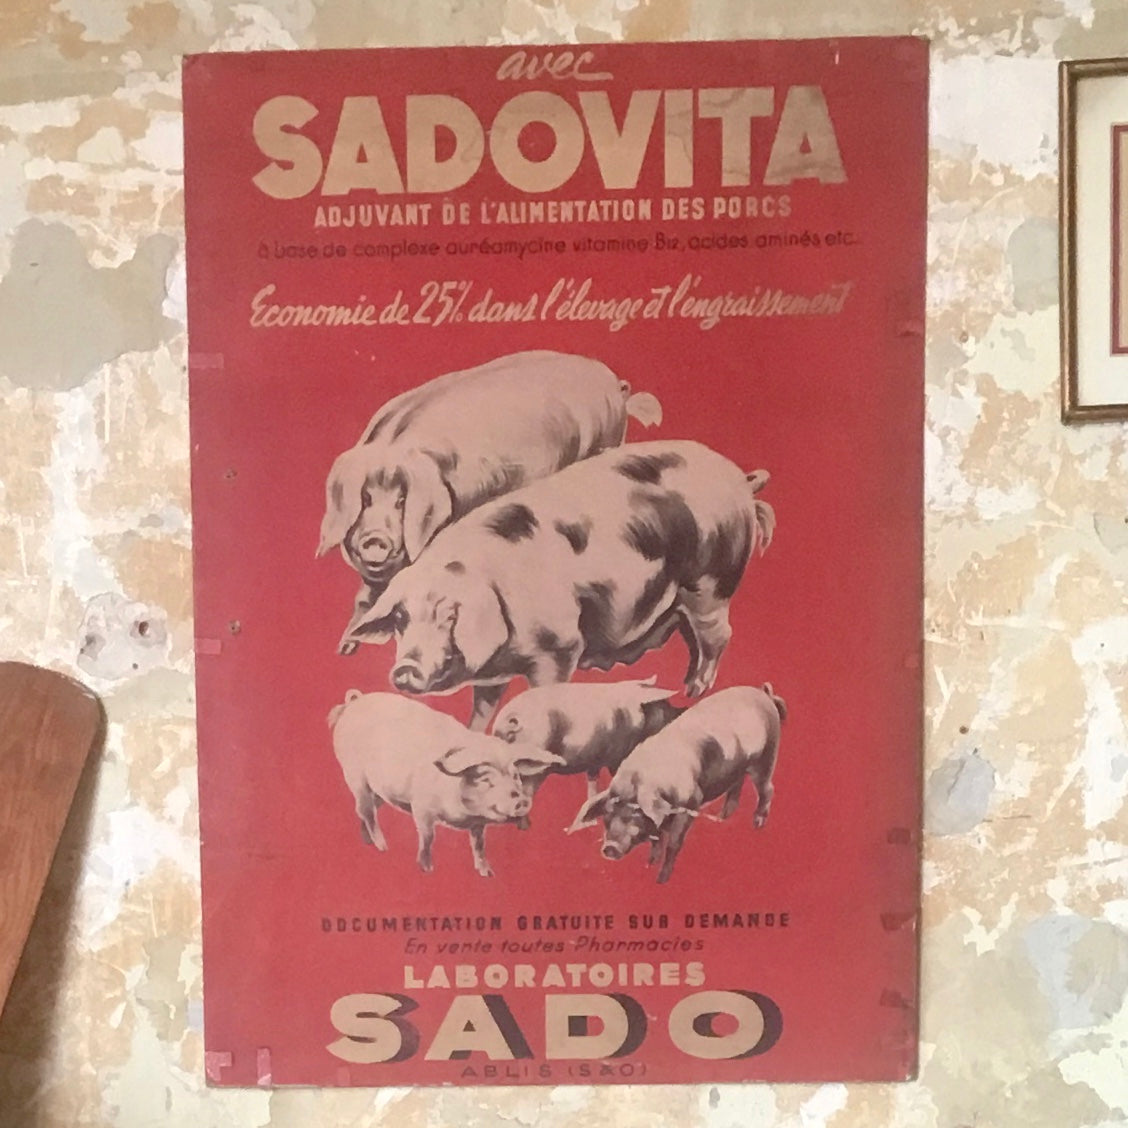 Affiche publicitaire Sadovita par Laboratoires Sado